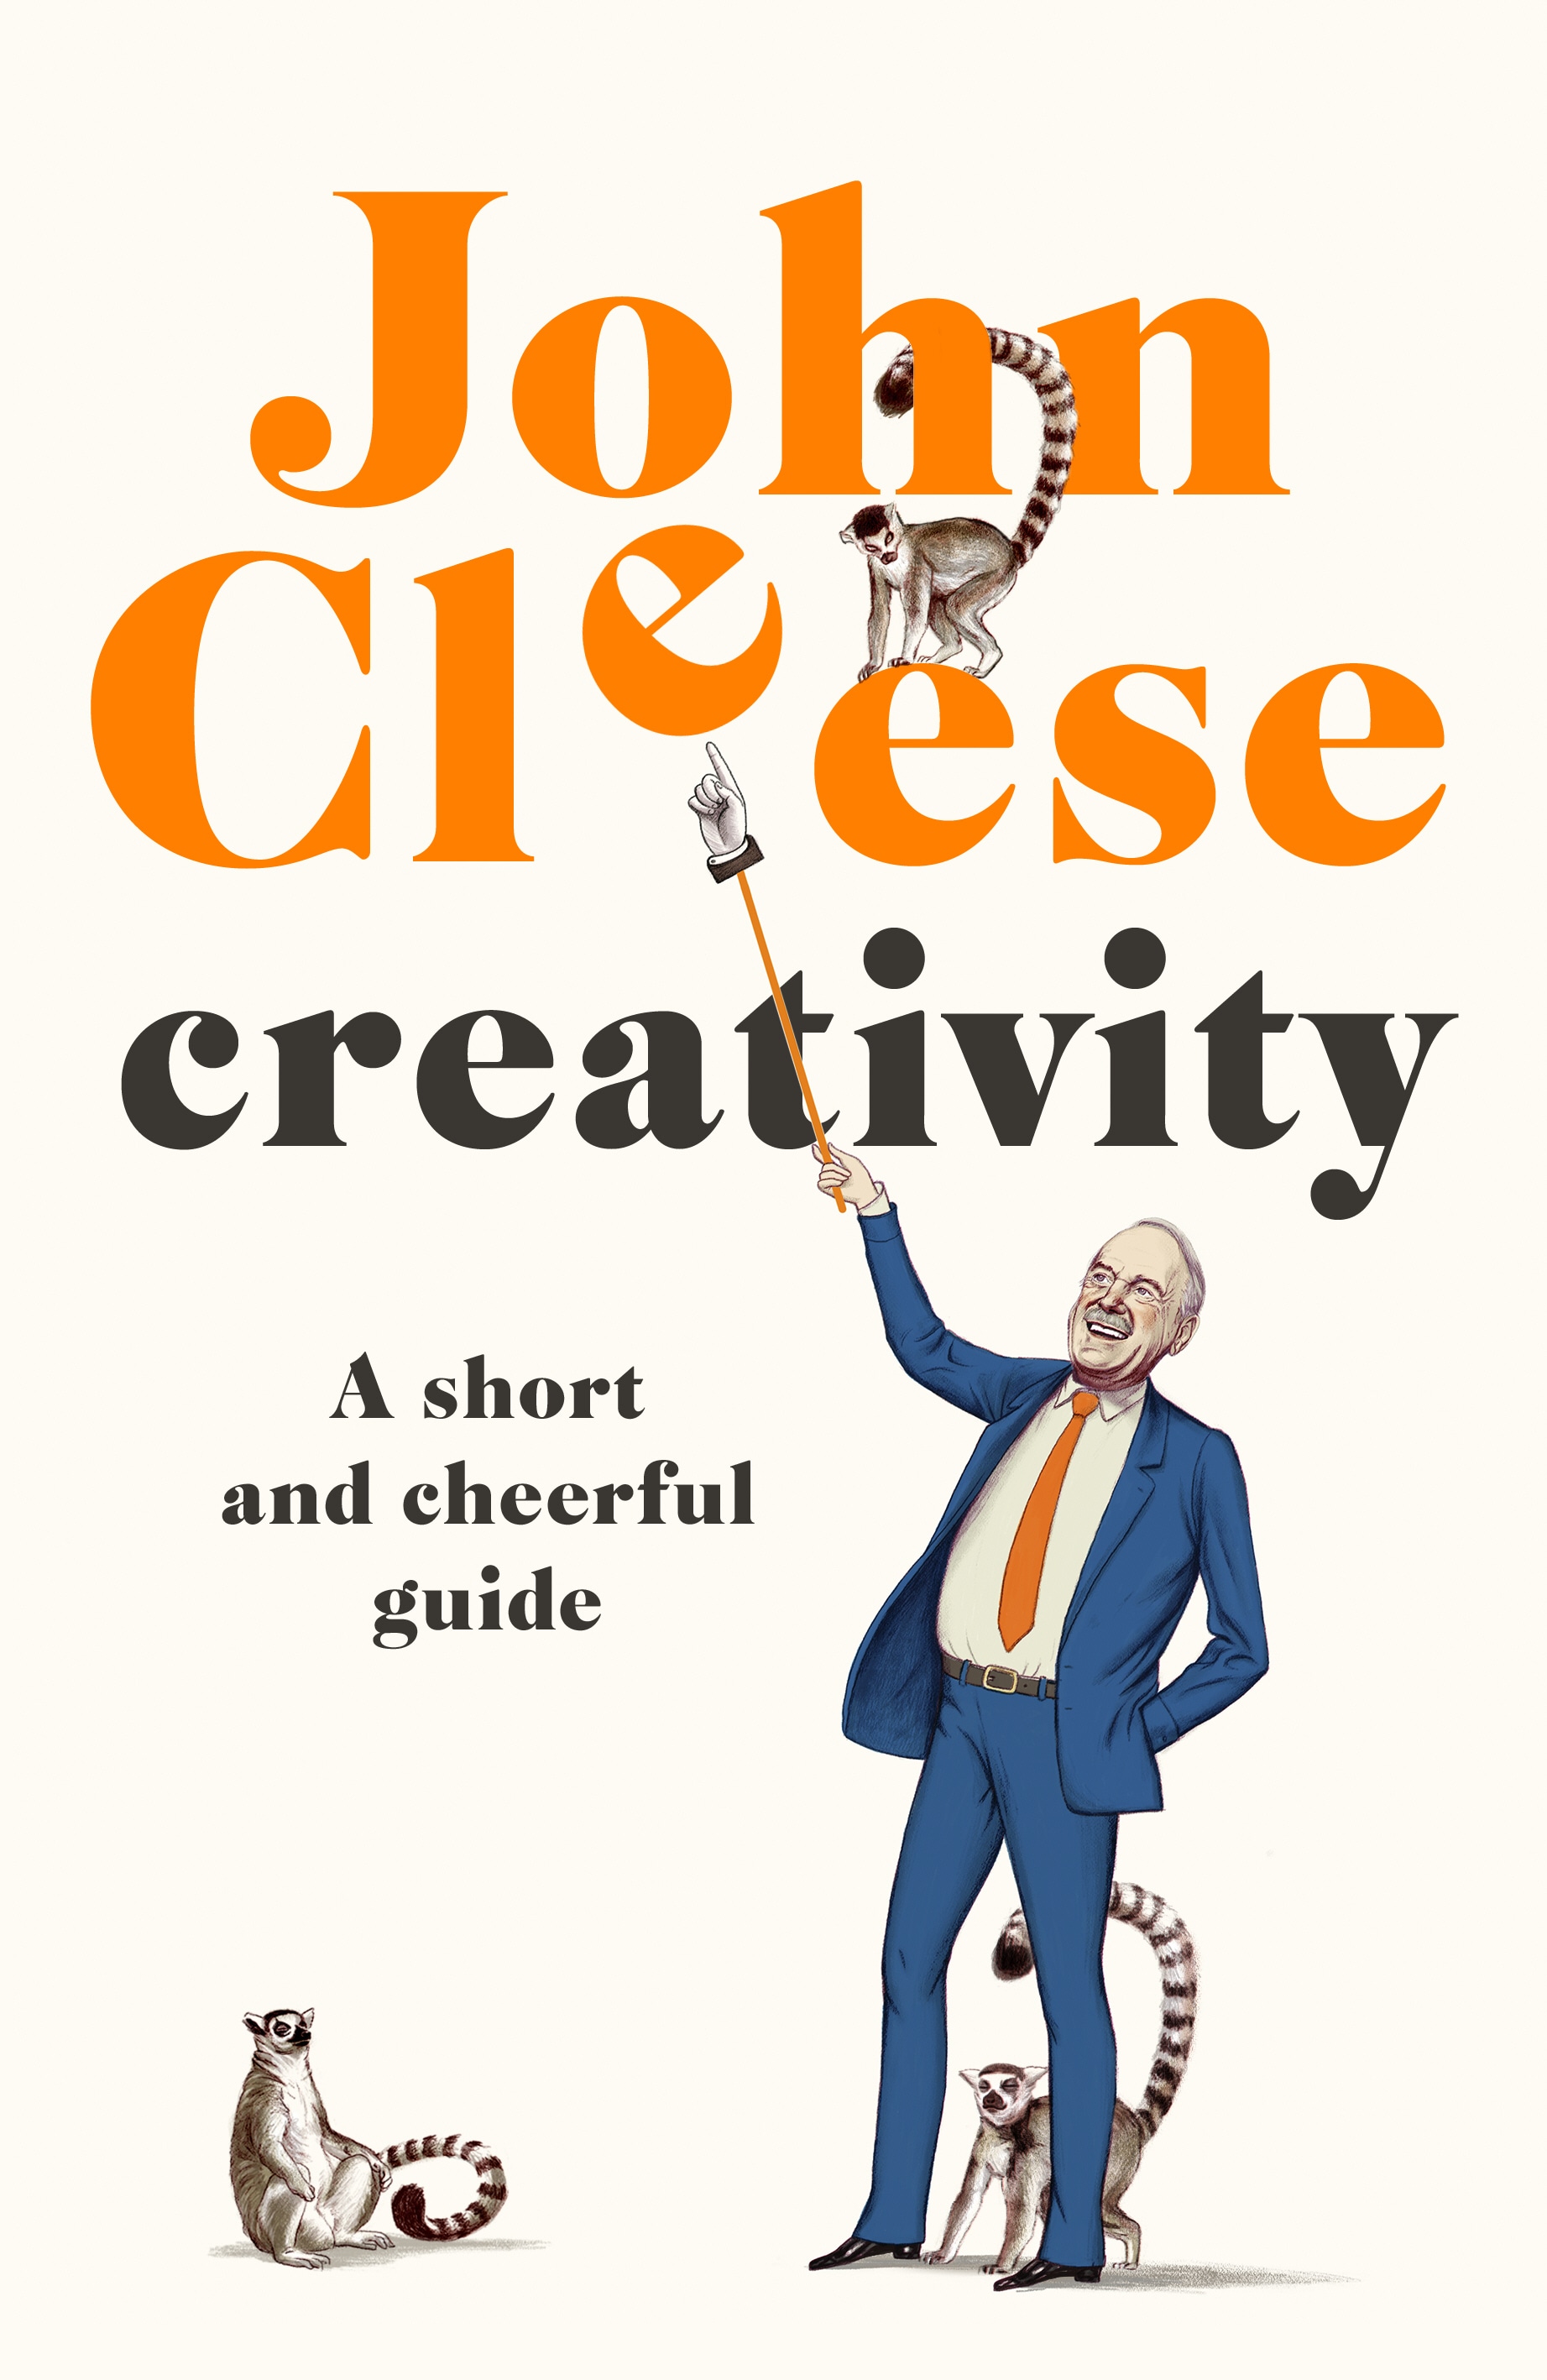 Book “Creativity” by John Cleese — September 3, 2020